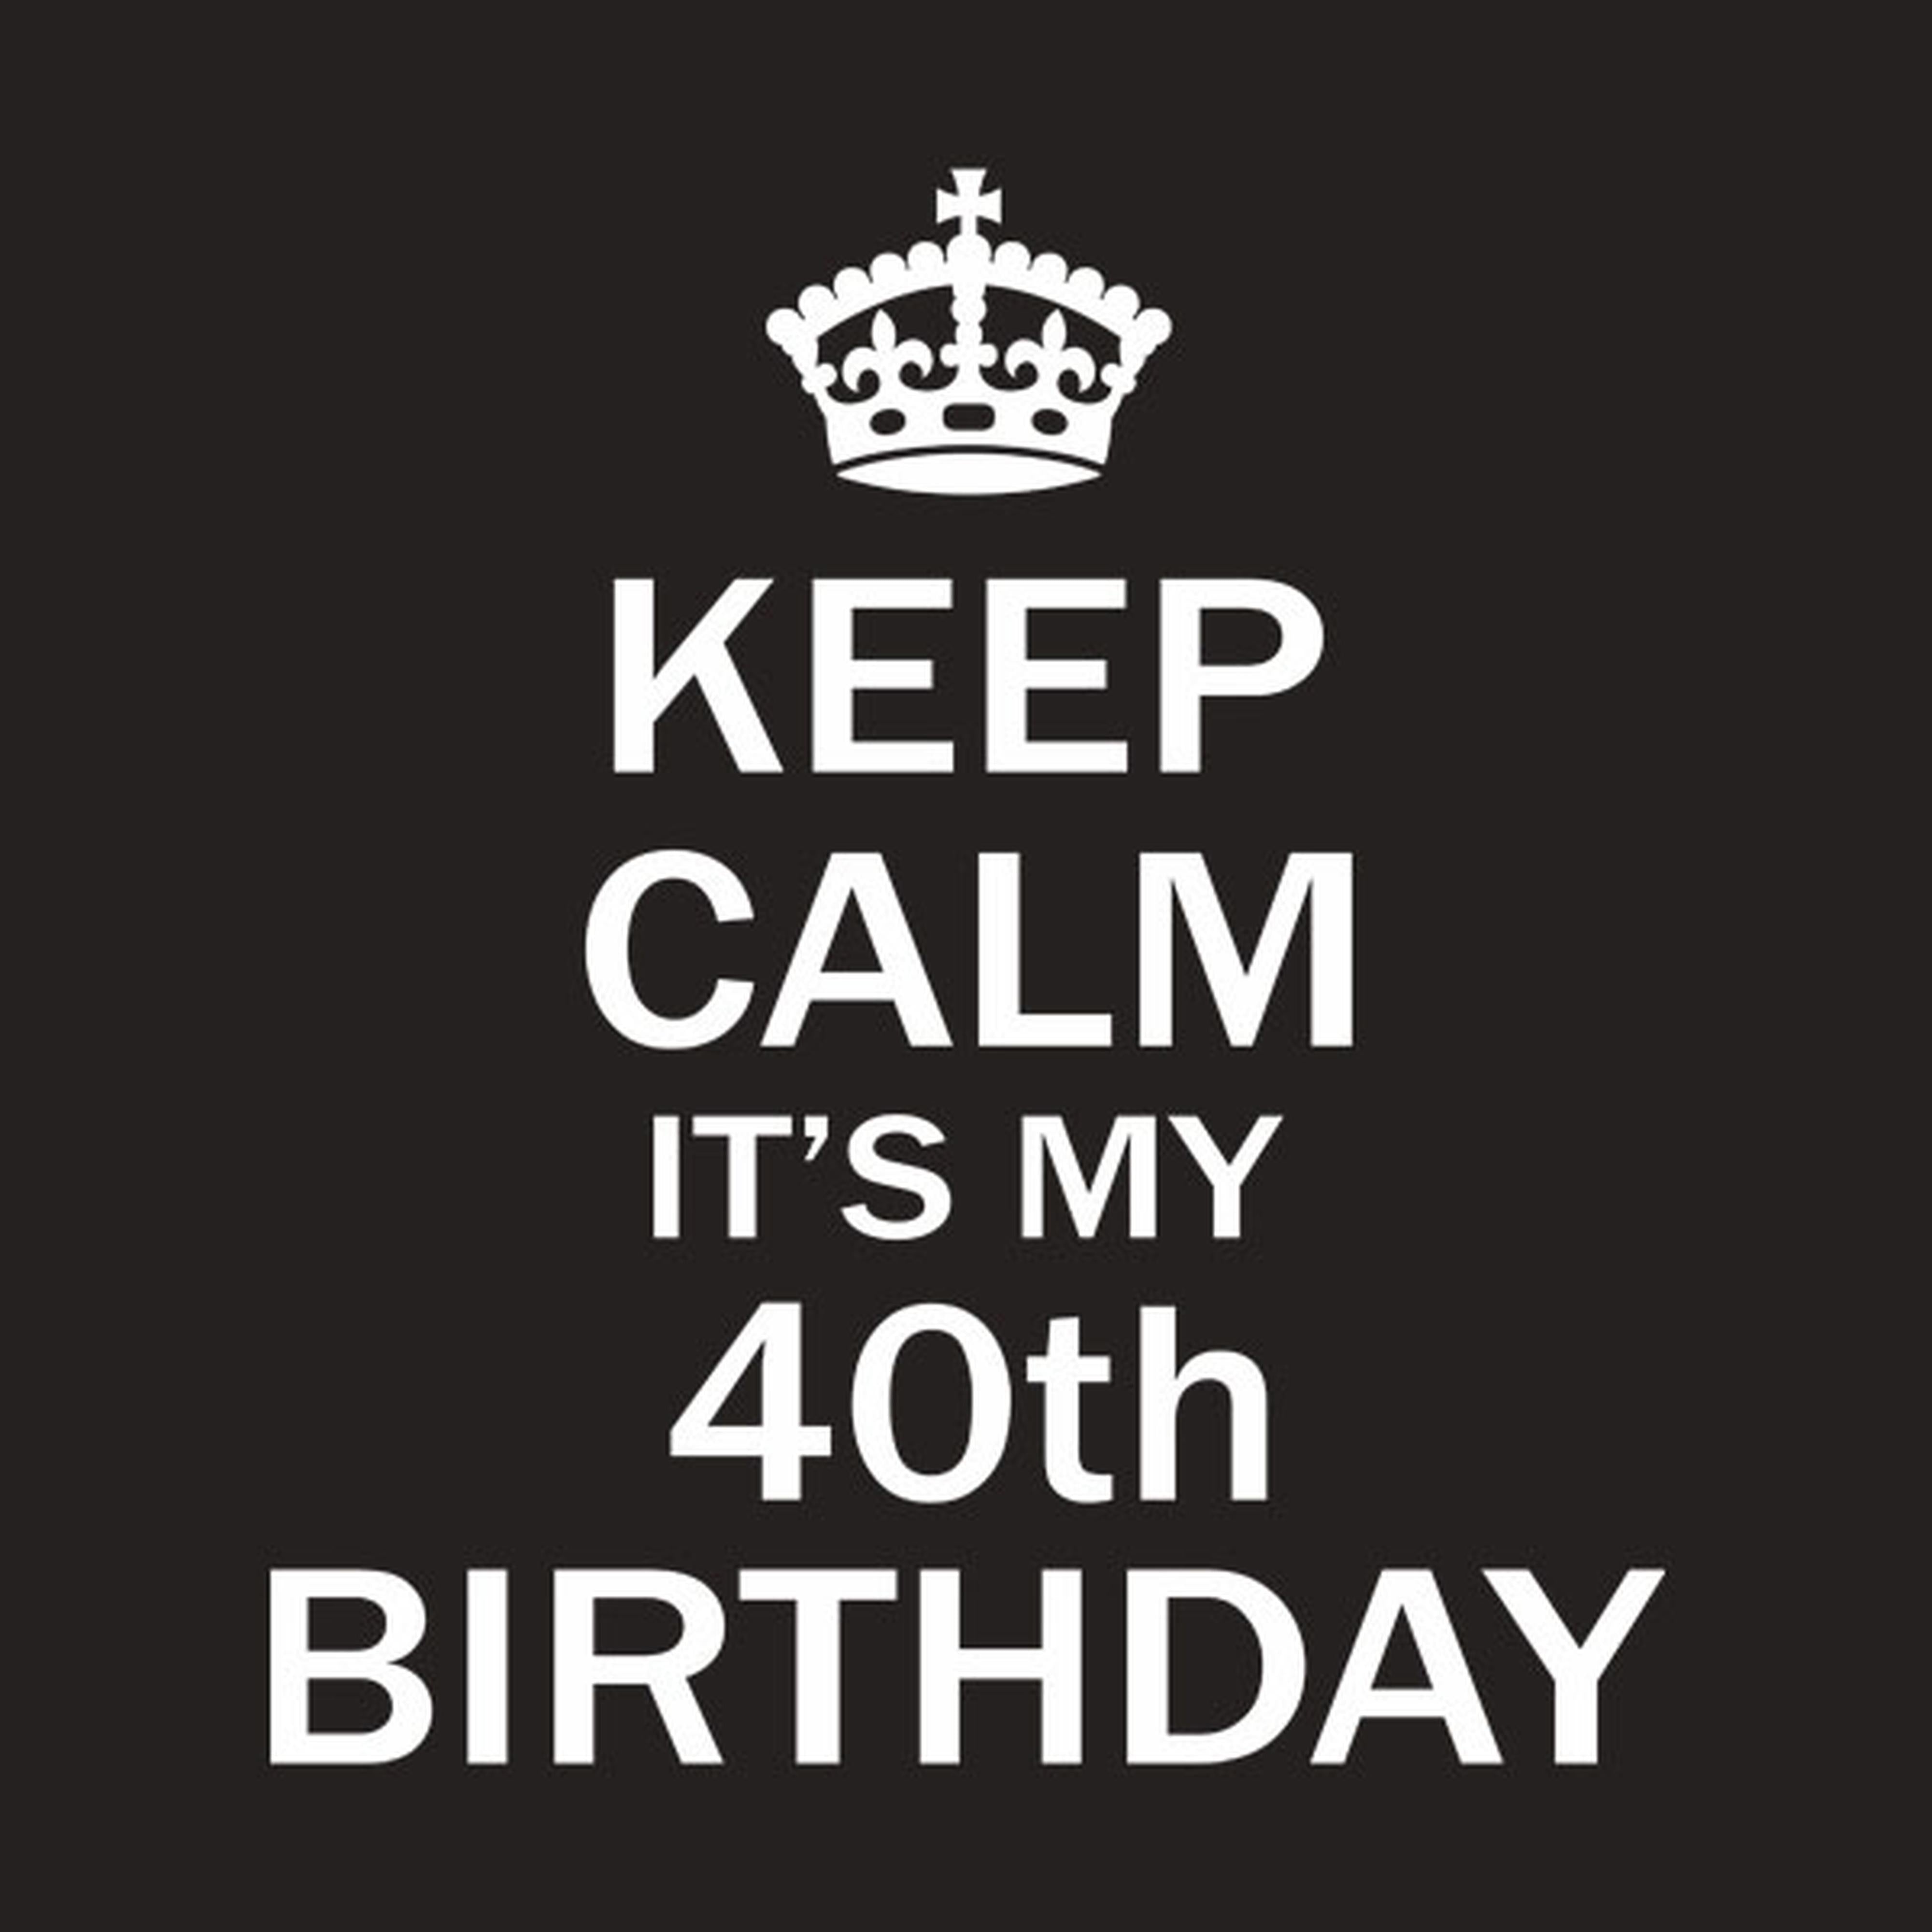 Keep calm it's my 40th birthday